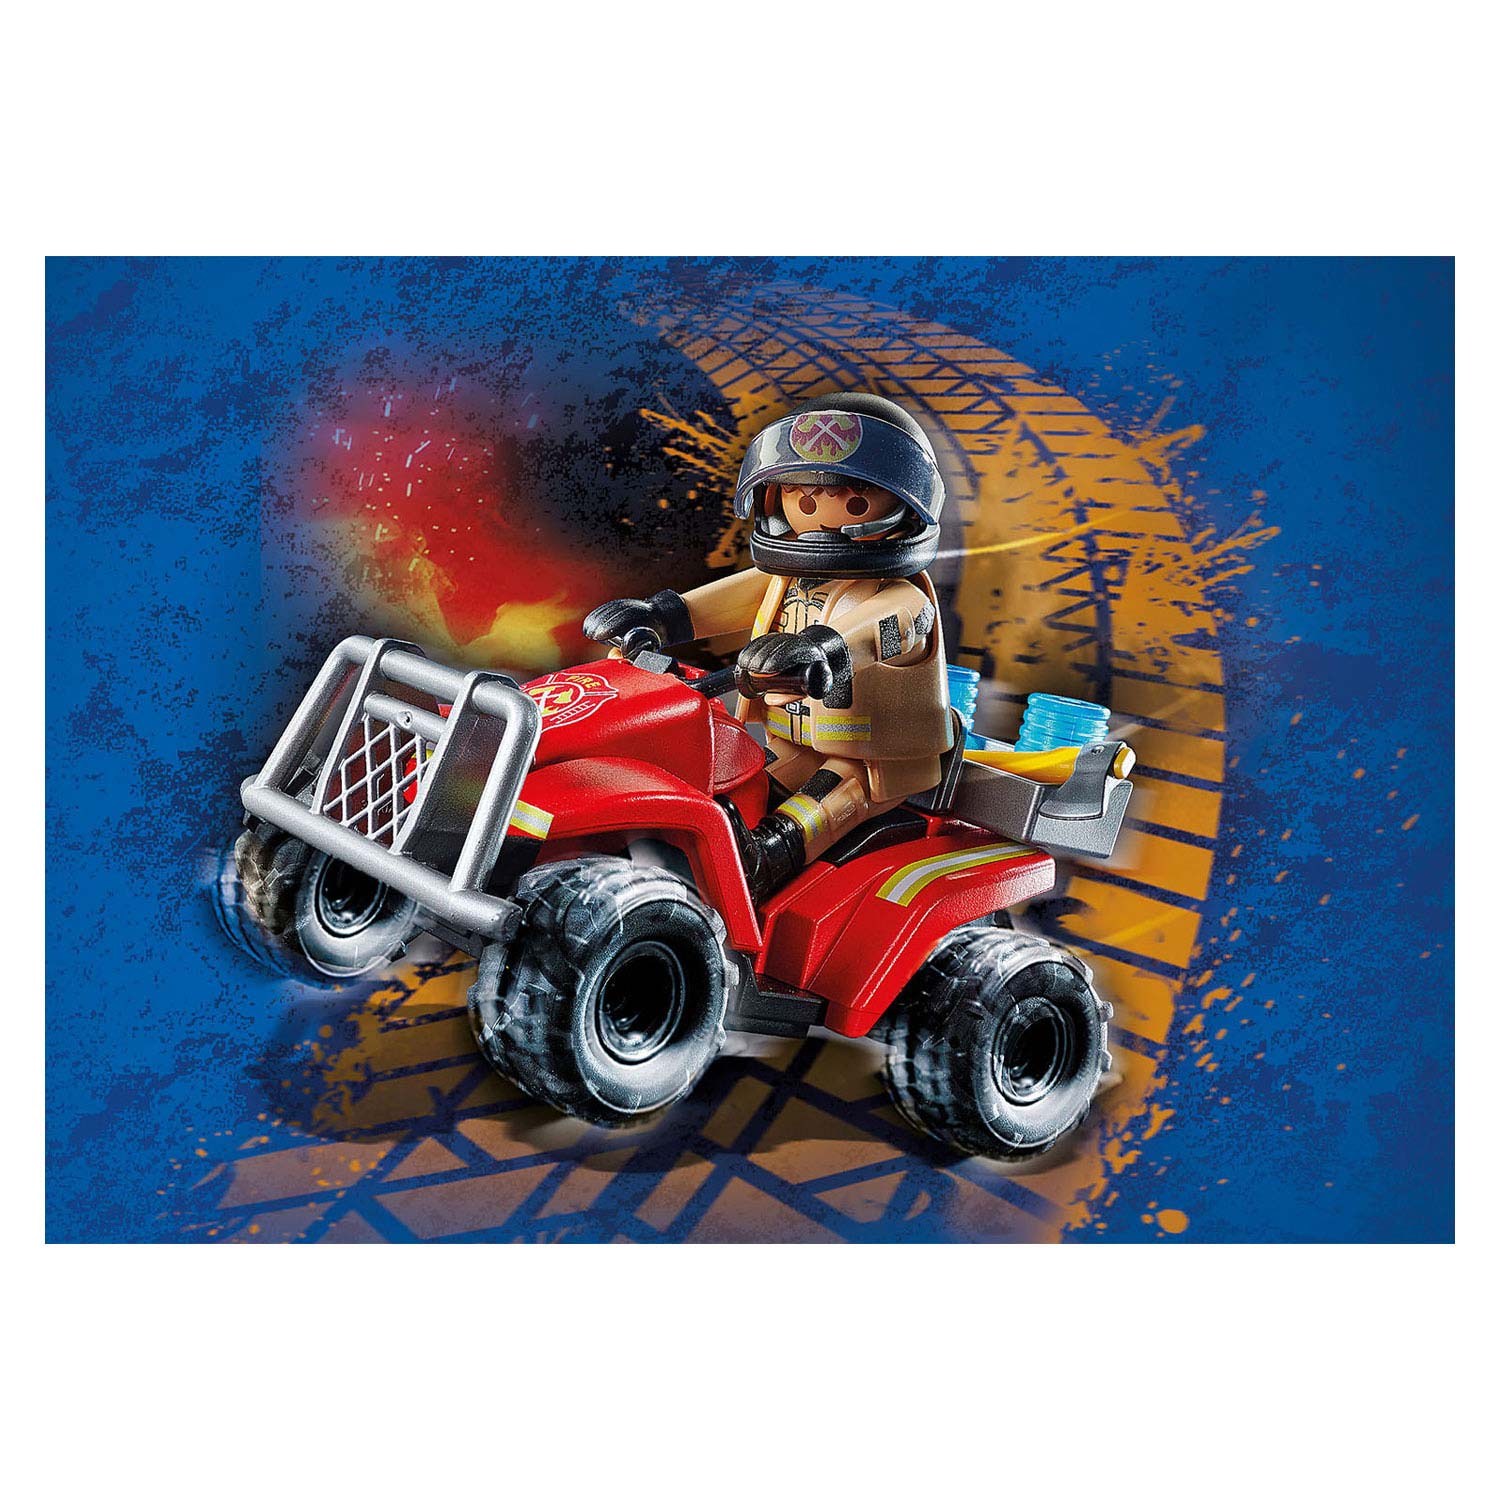 Playmobil City Action Pompiers Speed ​​​​Quad - 71090